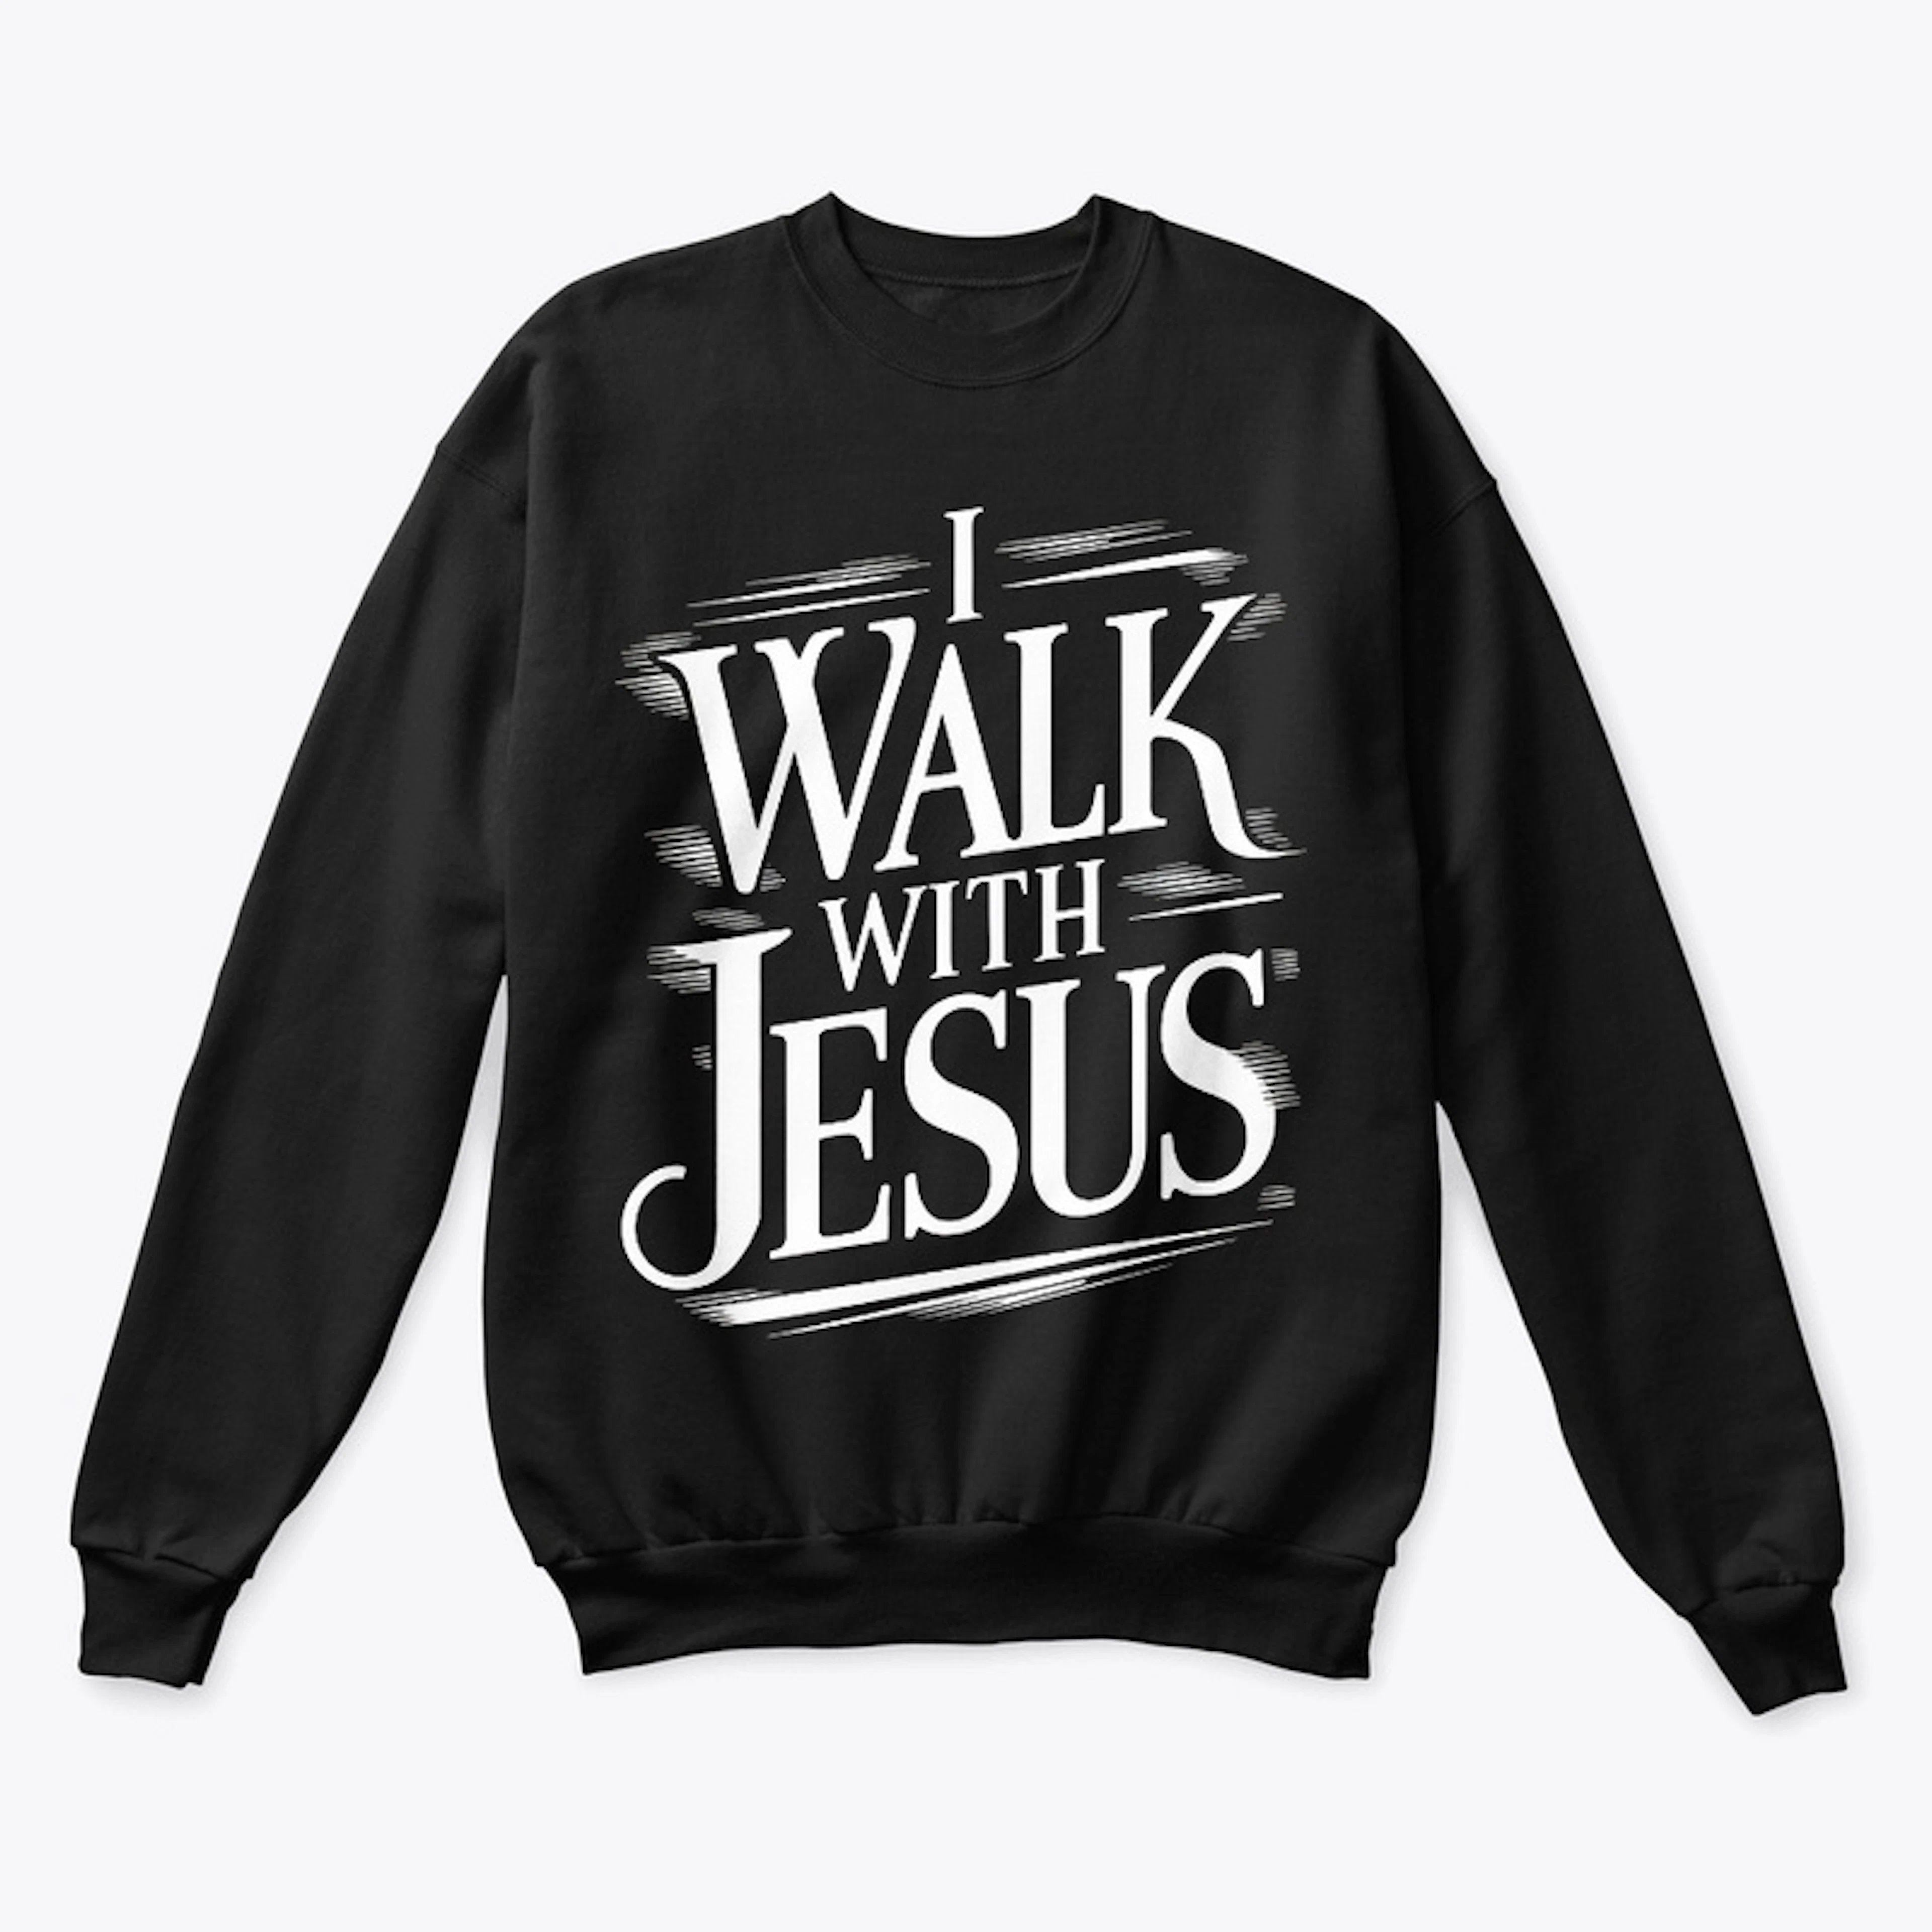 "I Walk With Jesus" Daily Affirmation